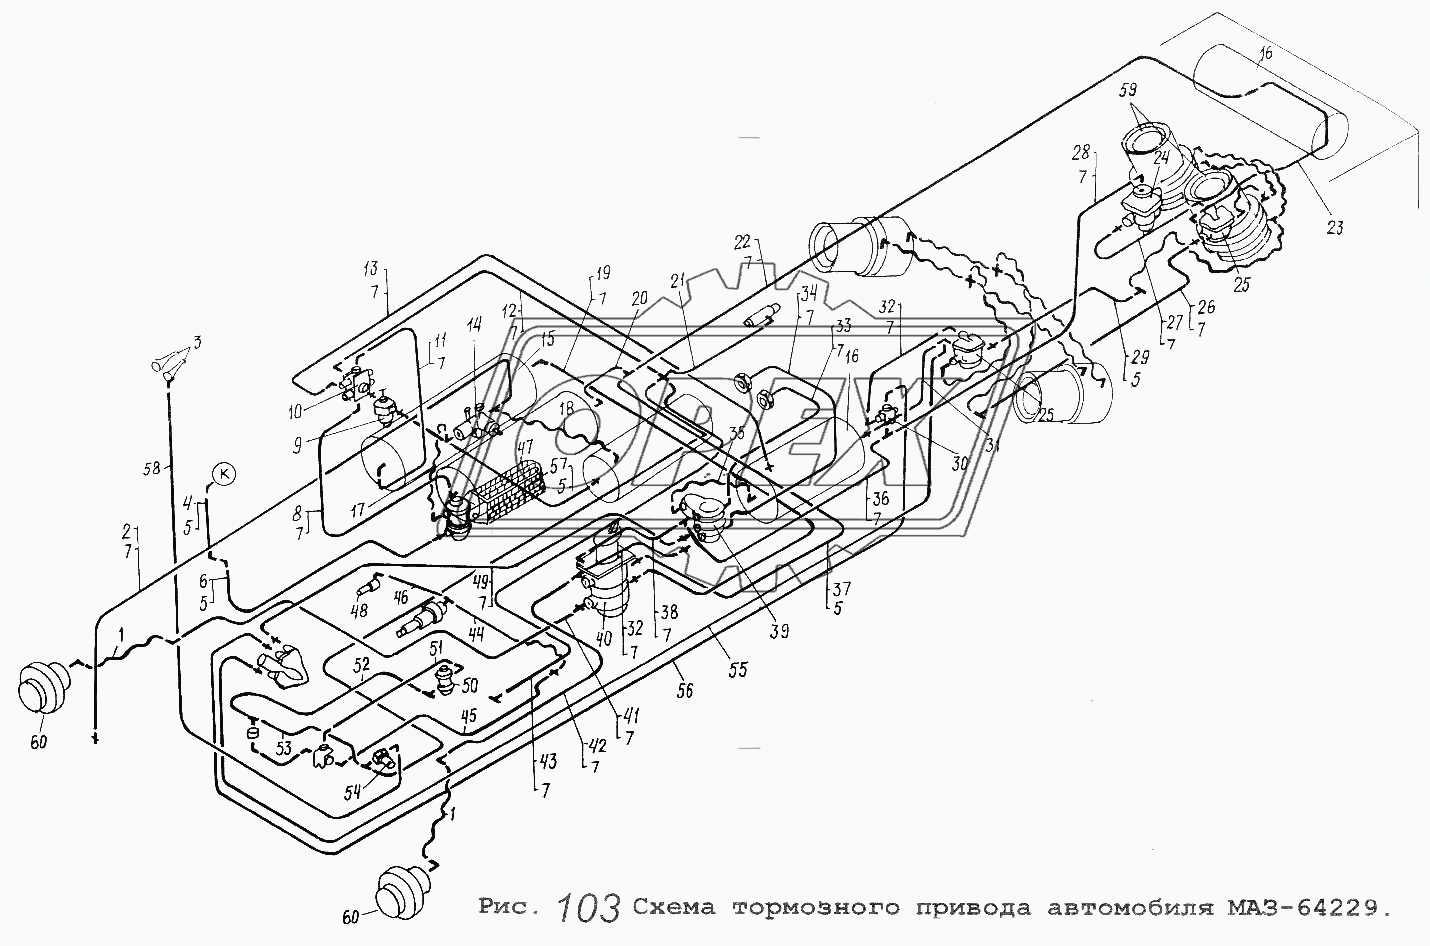 Схема тормозного привода автомобиля МАЗ-64229